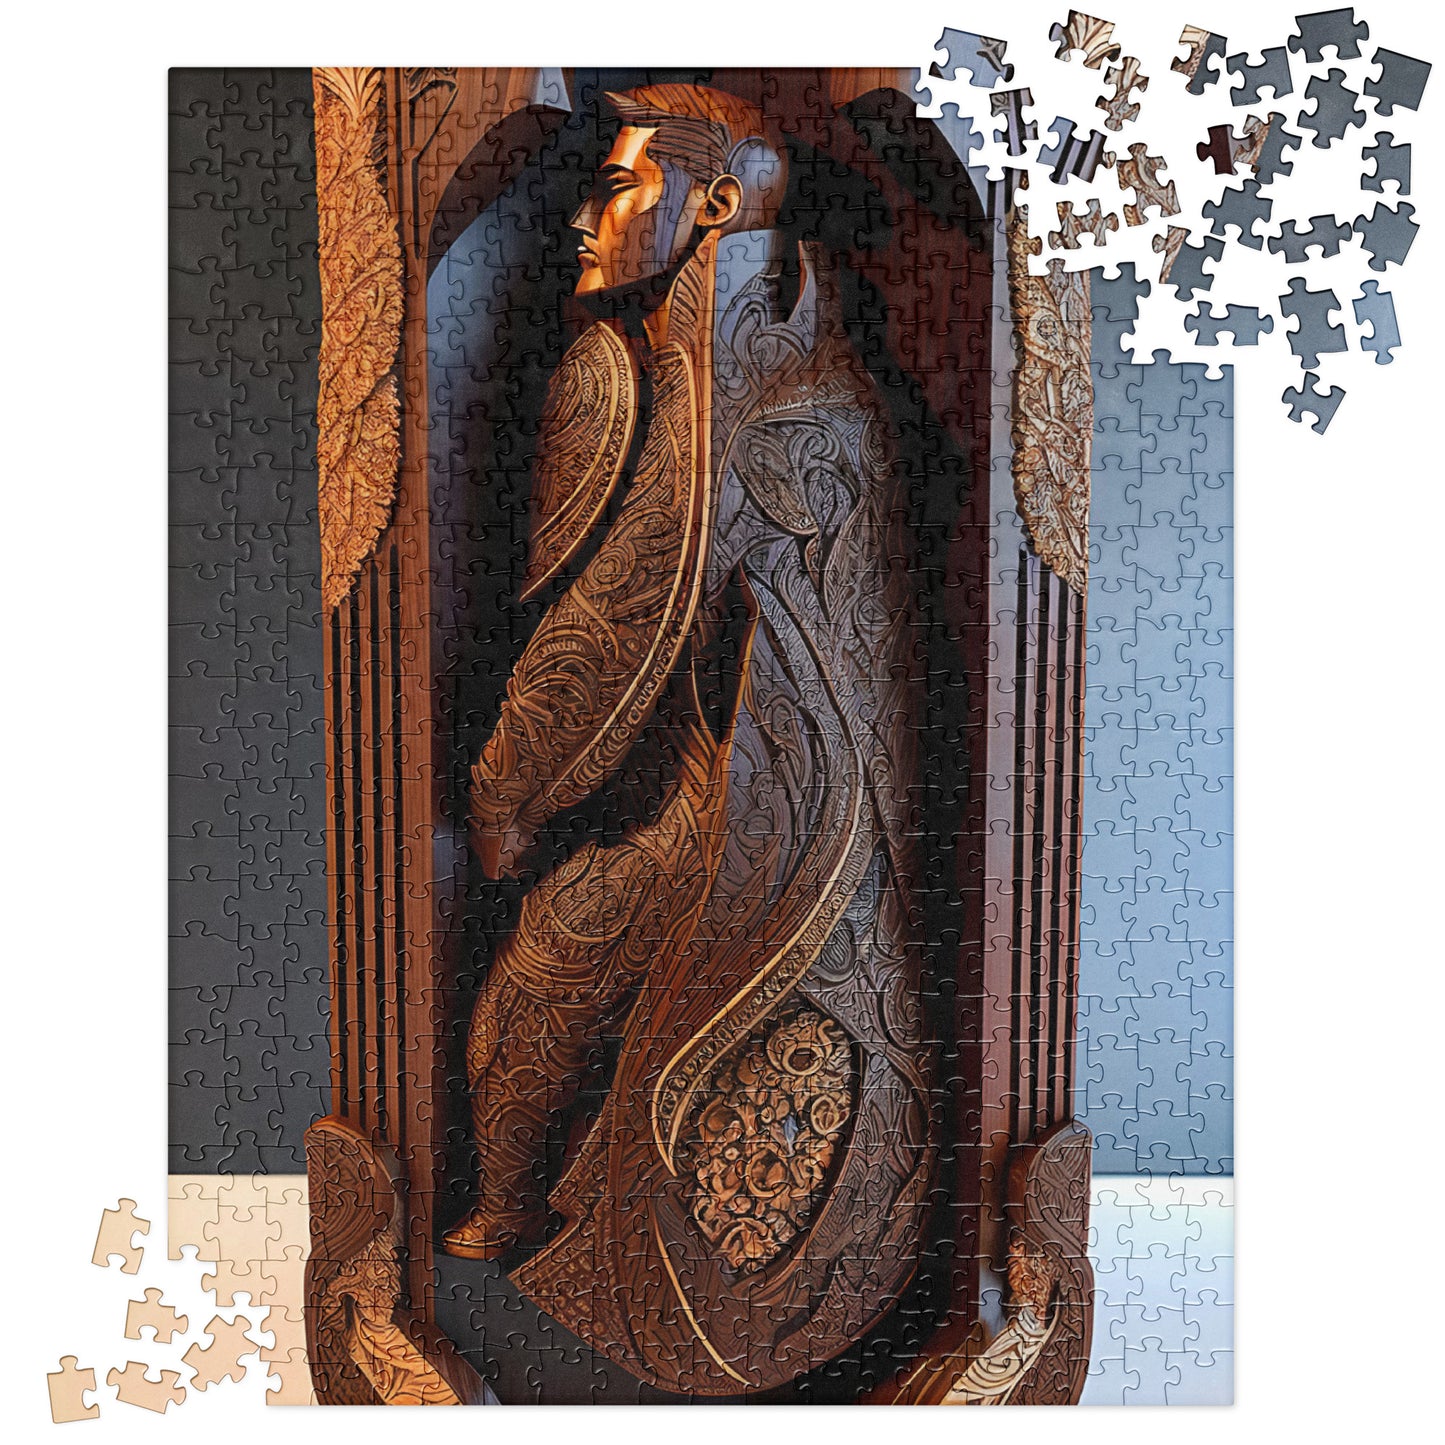 3D Wooden Figure - Jigsaw Puzzle #75